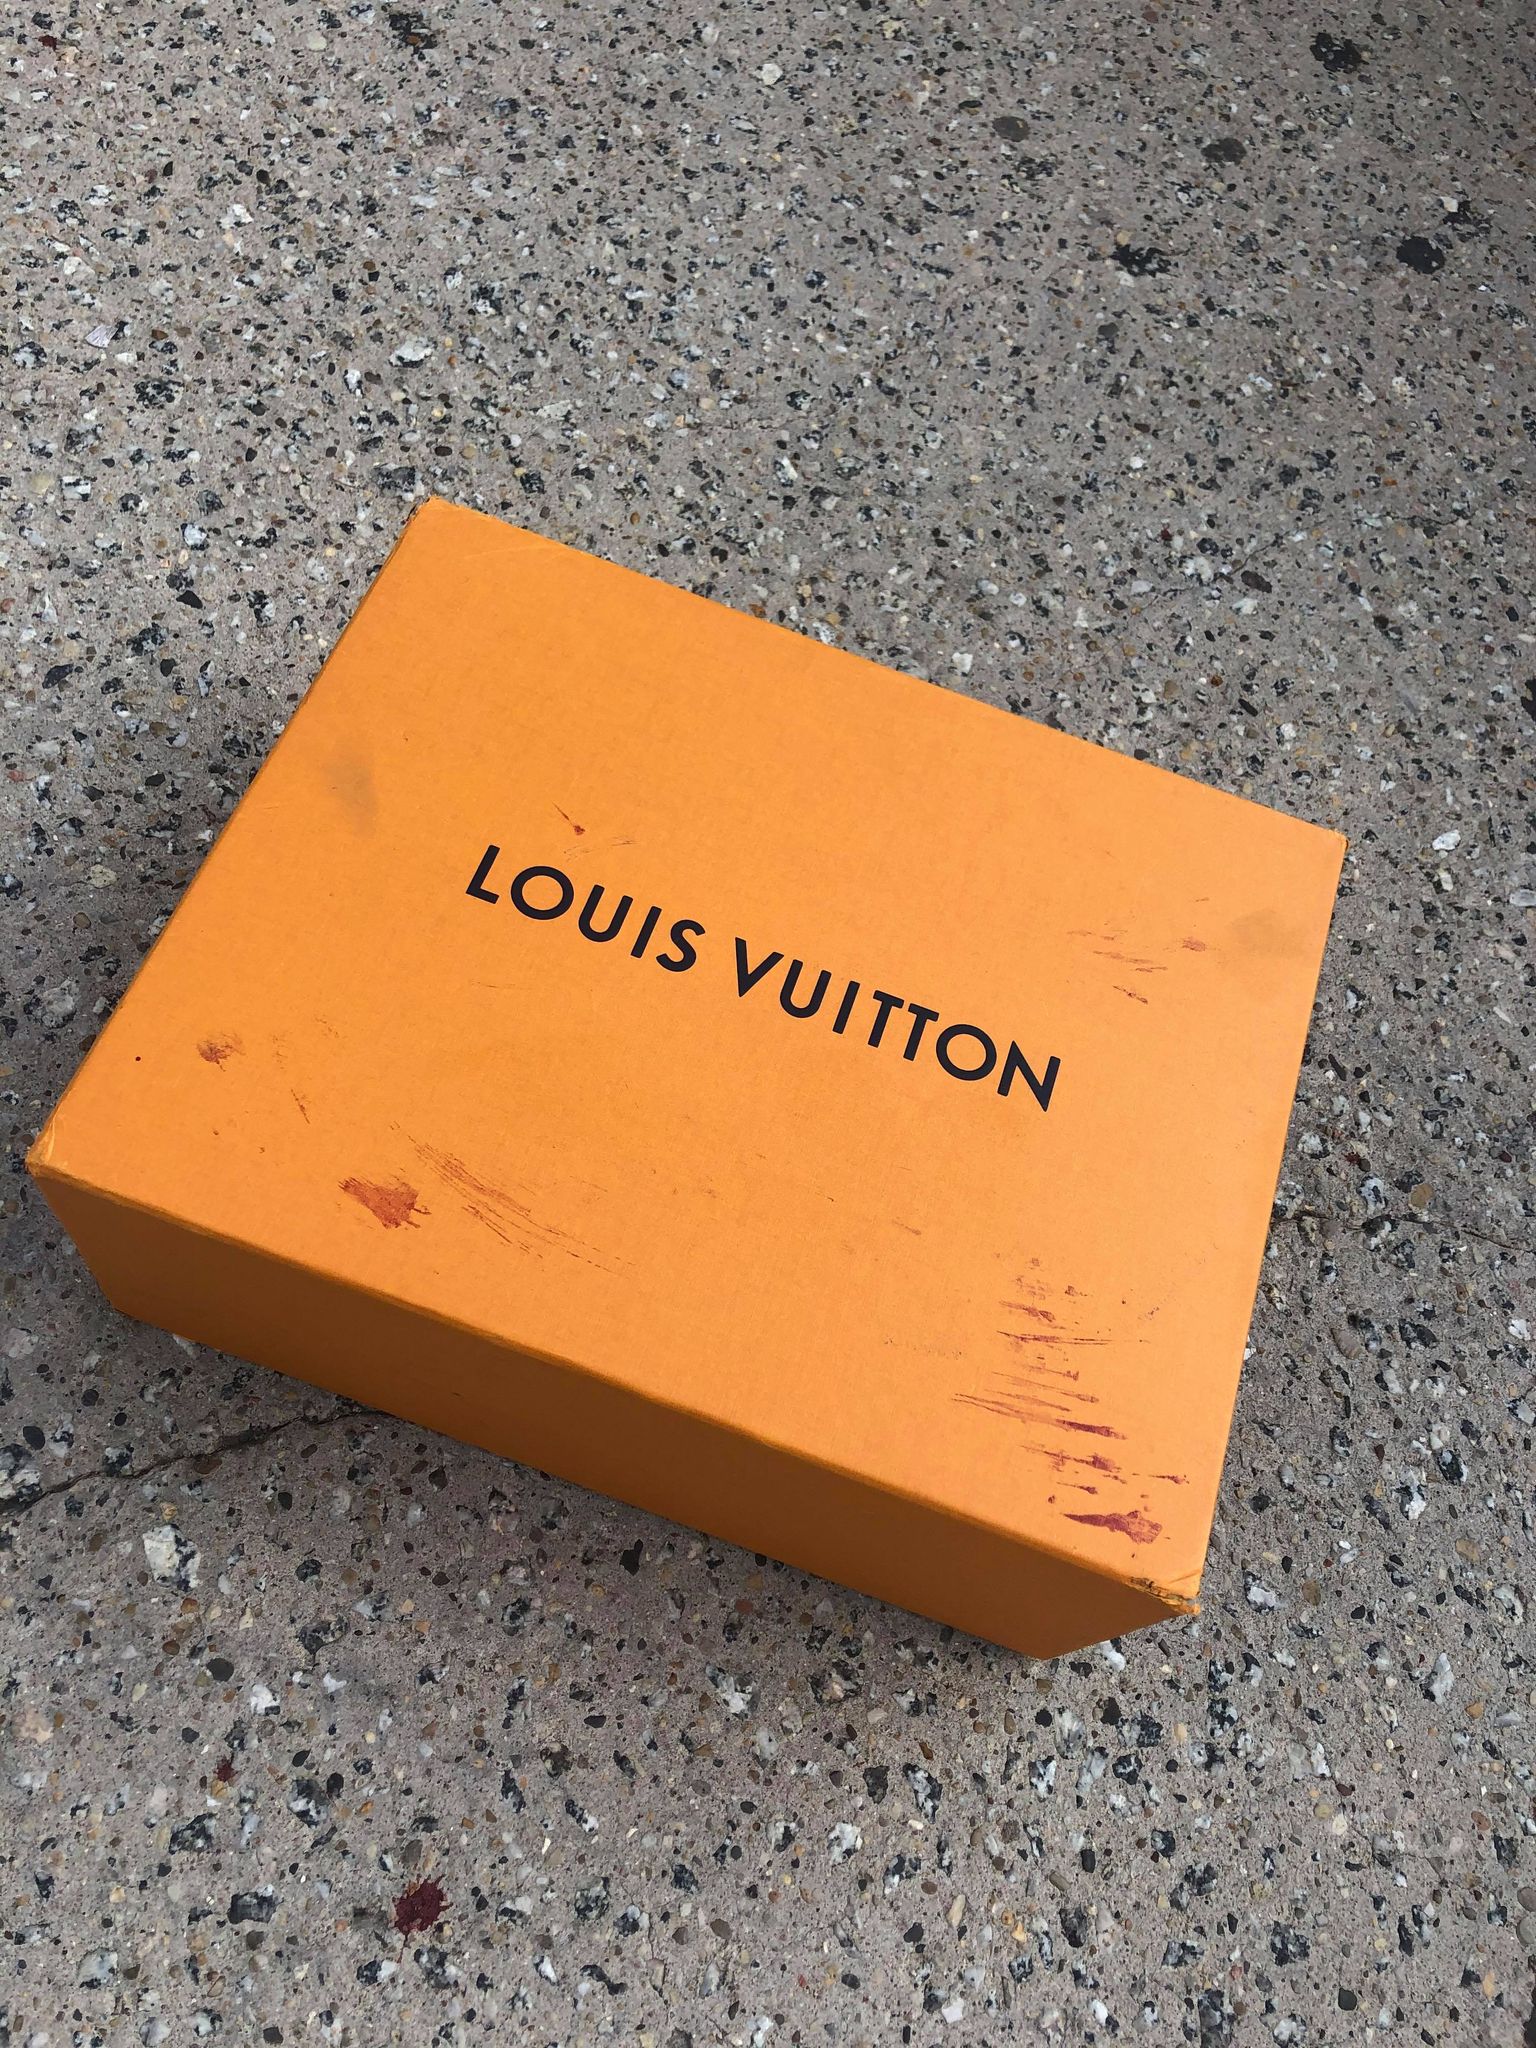 Louis Vuitton Michigan Avenue